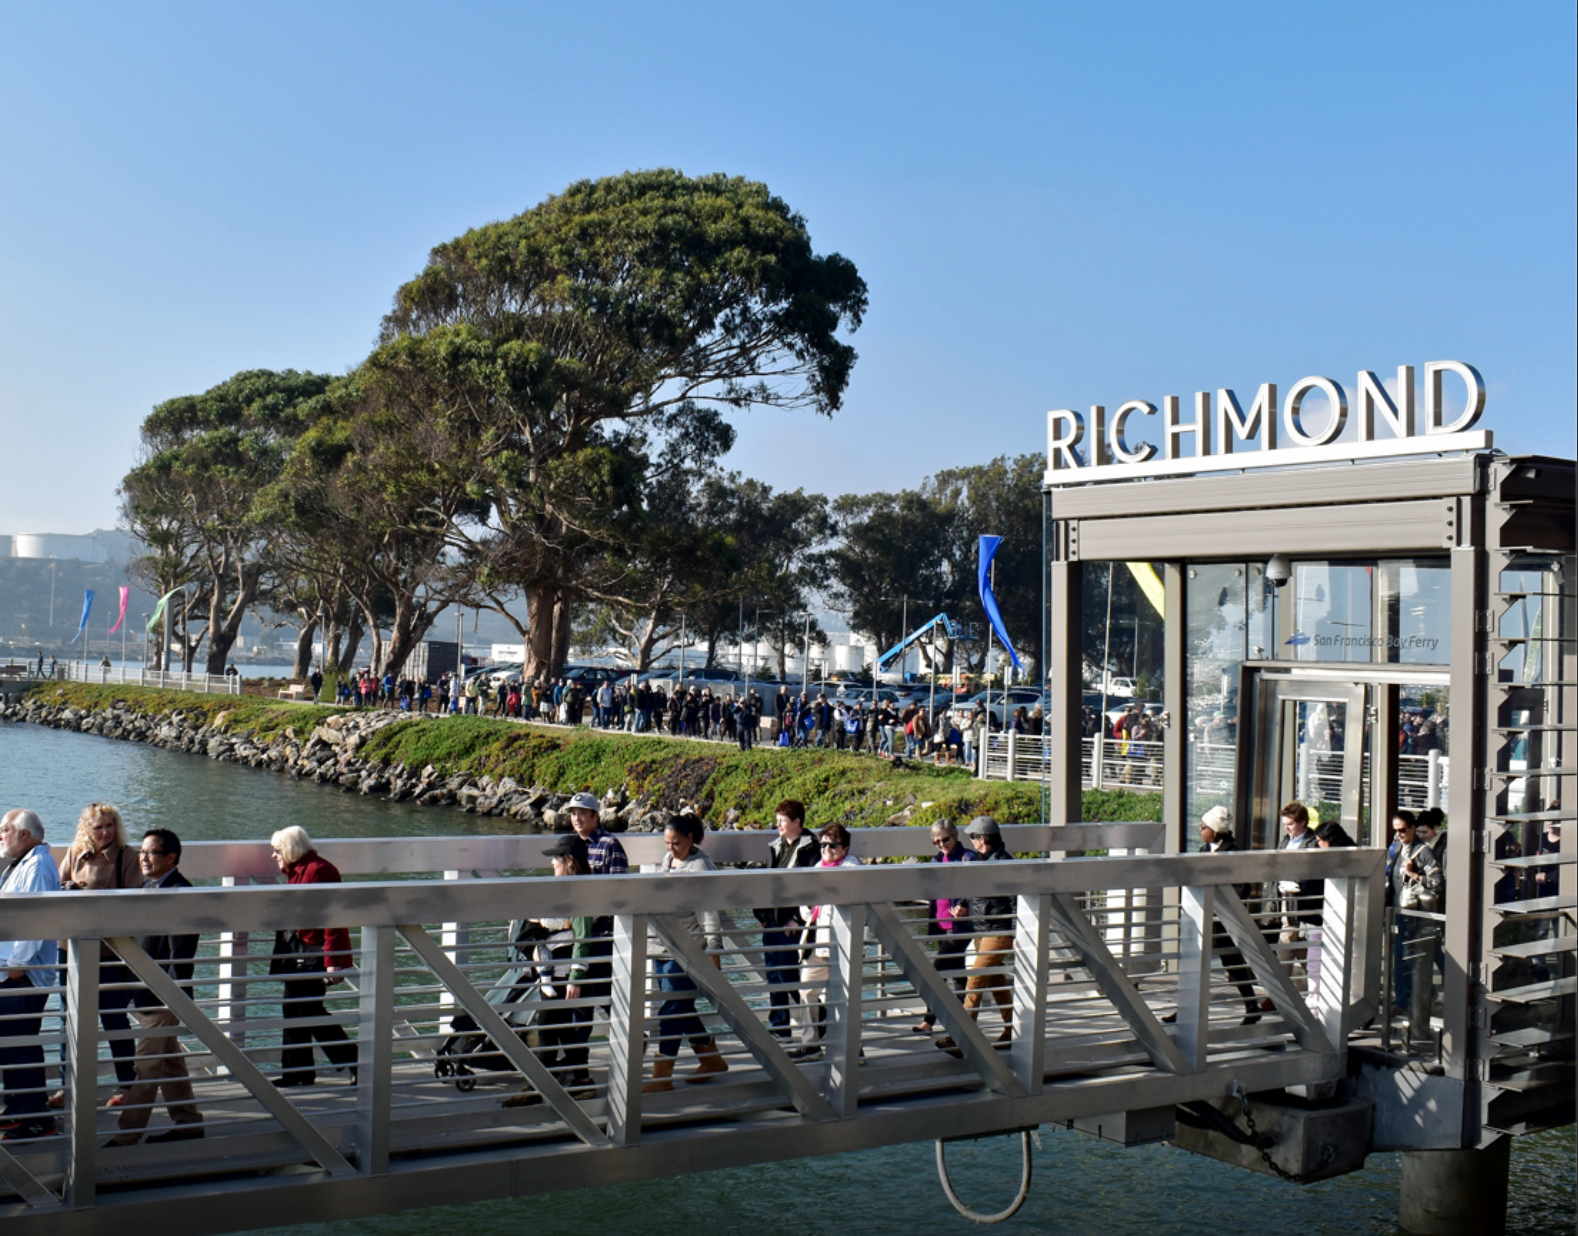 Image of the beautiful city of Richmond